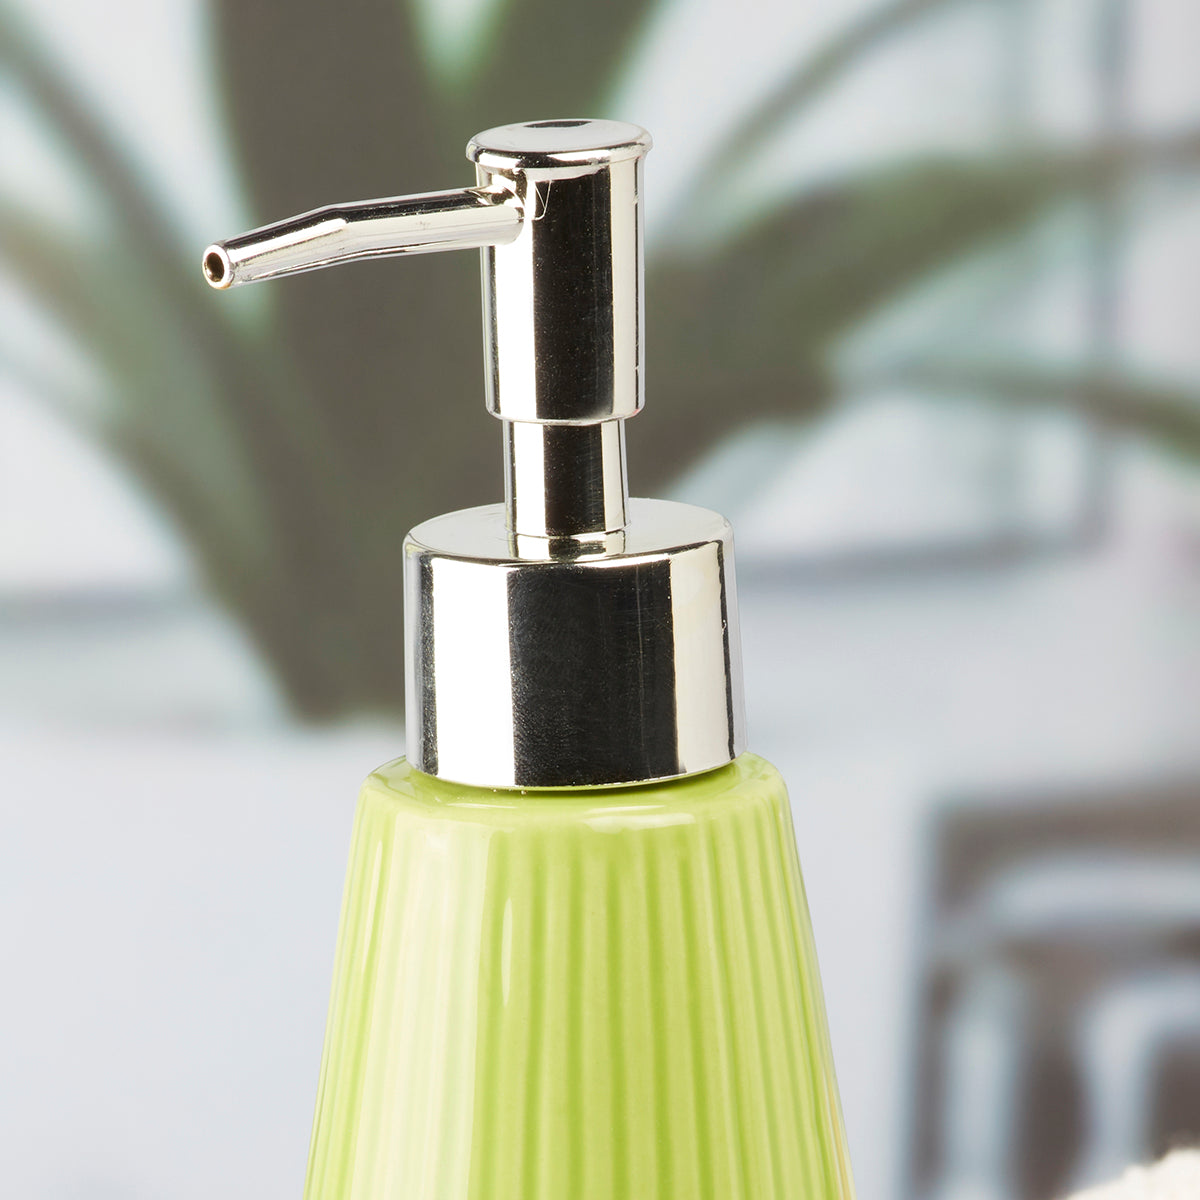 Ceramic Soap Dispenser handwash Pump for Bathroom, Set of 1, Green (6040)